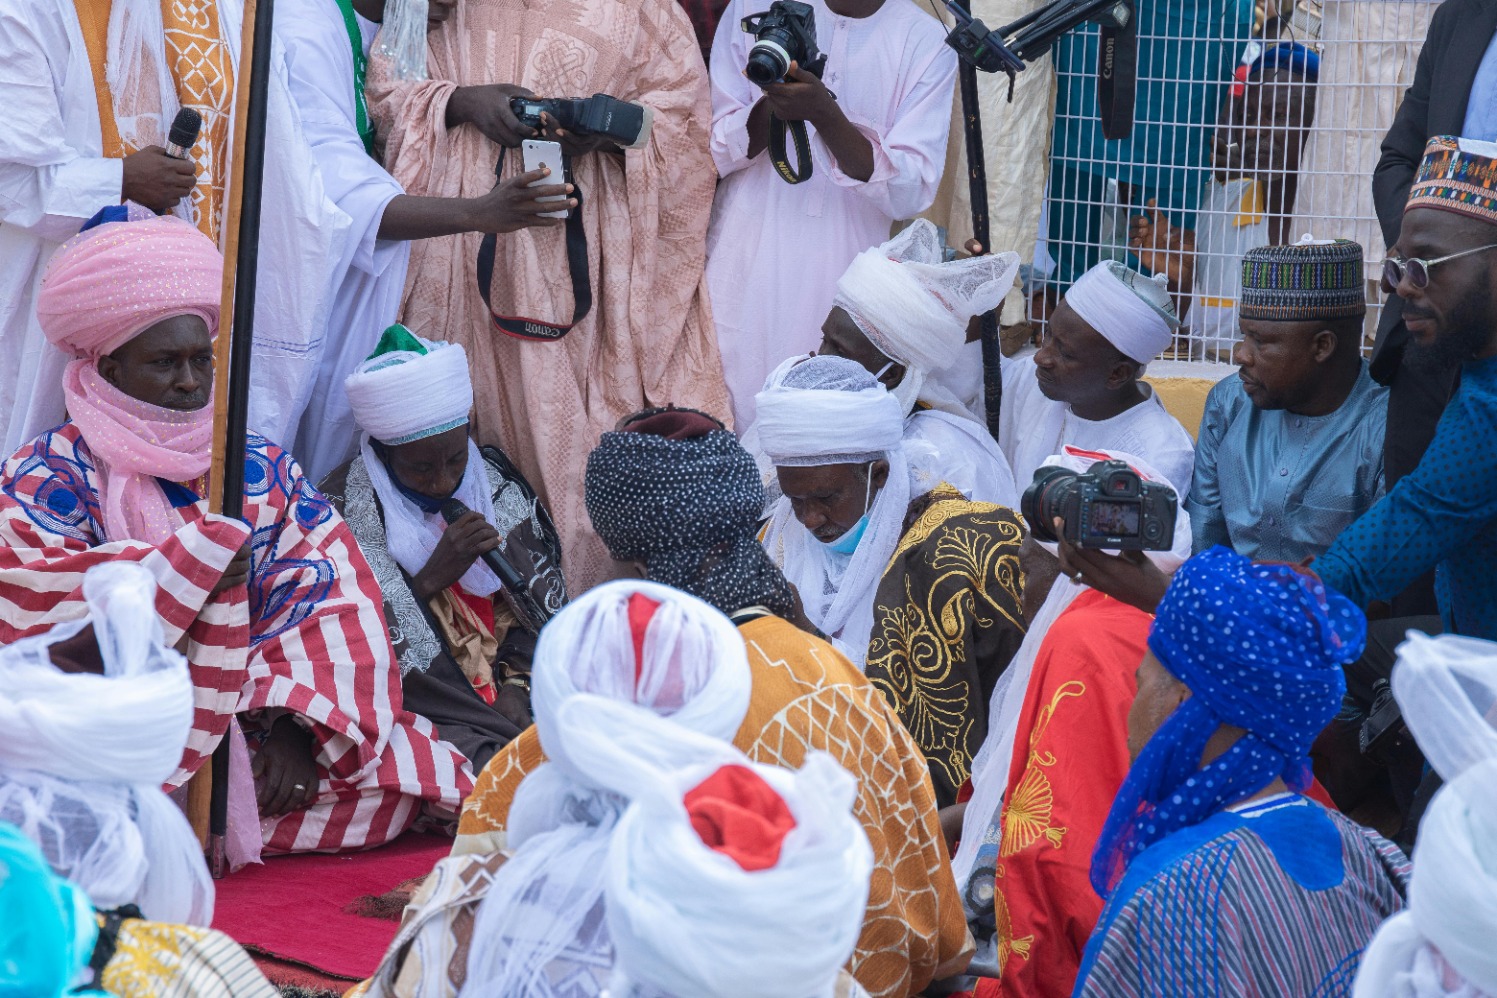 Ilustrasi perayaan Idulfitri. (Sumber gambar: Ila Bappa Ibrahim/Pexels)